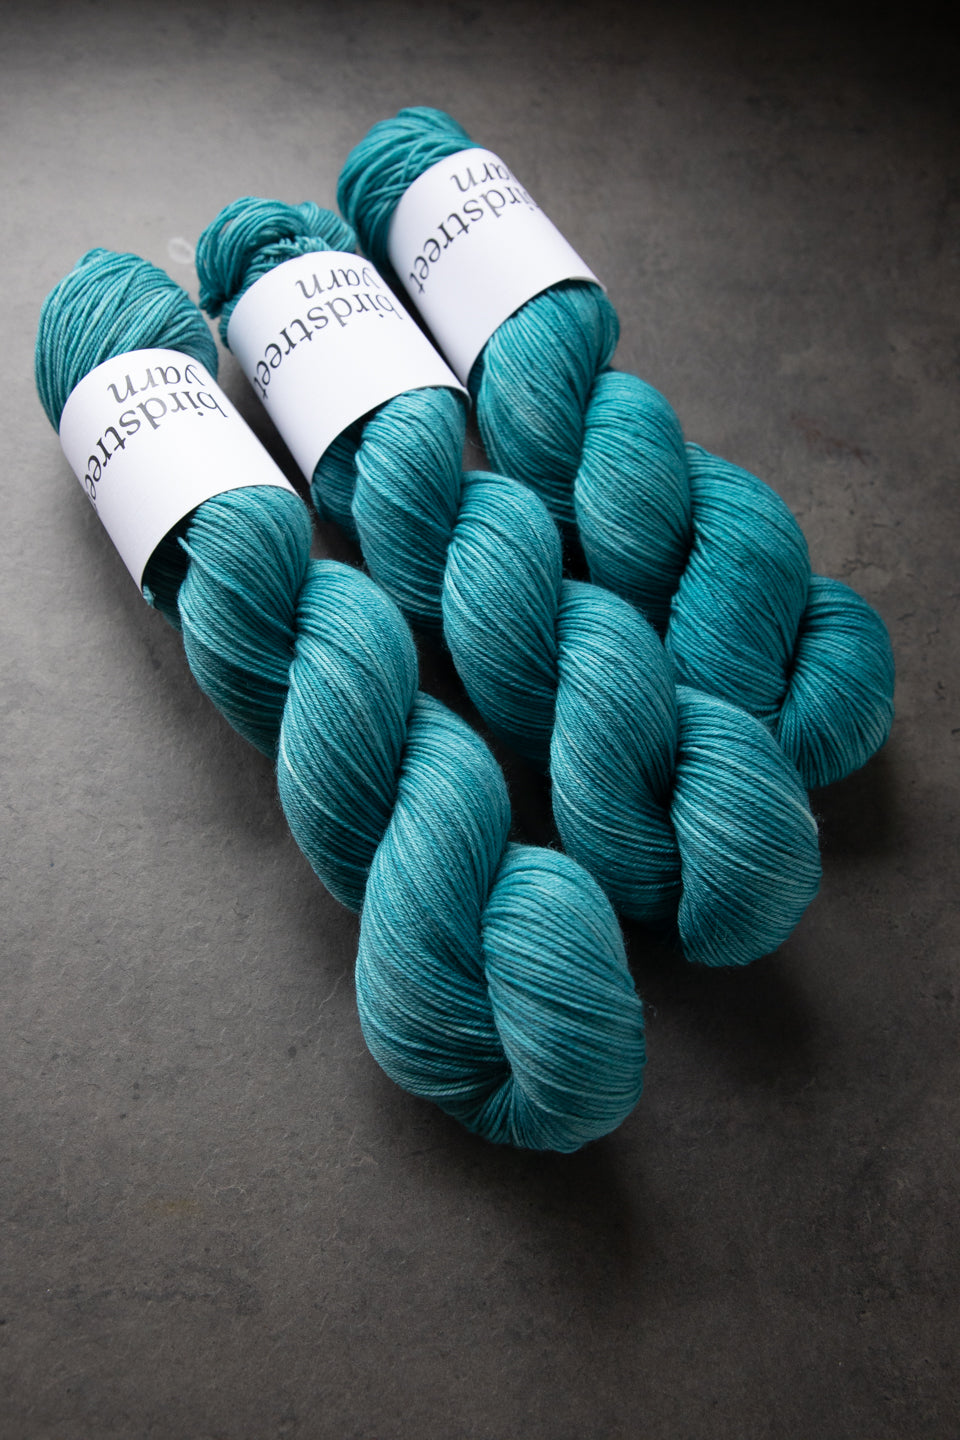 Scuba- 4ply - Hand-dyed yarn